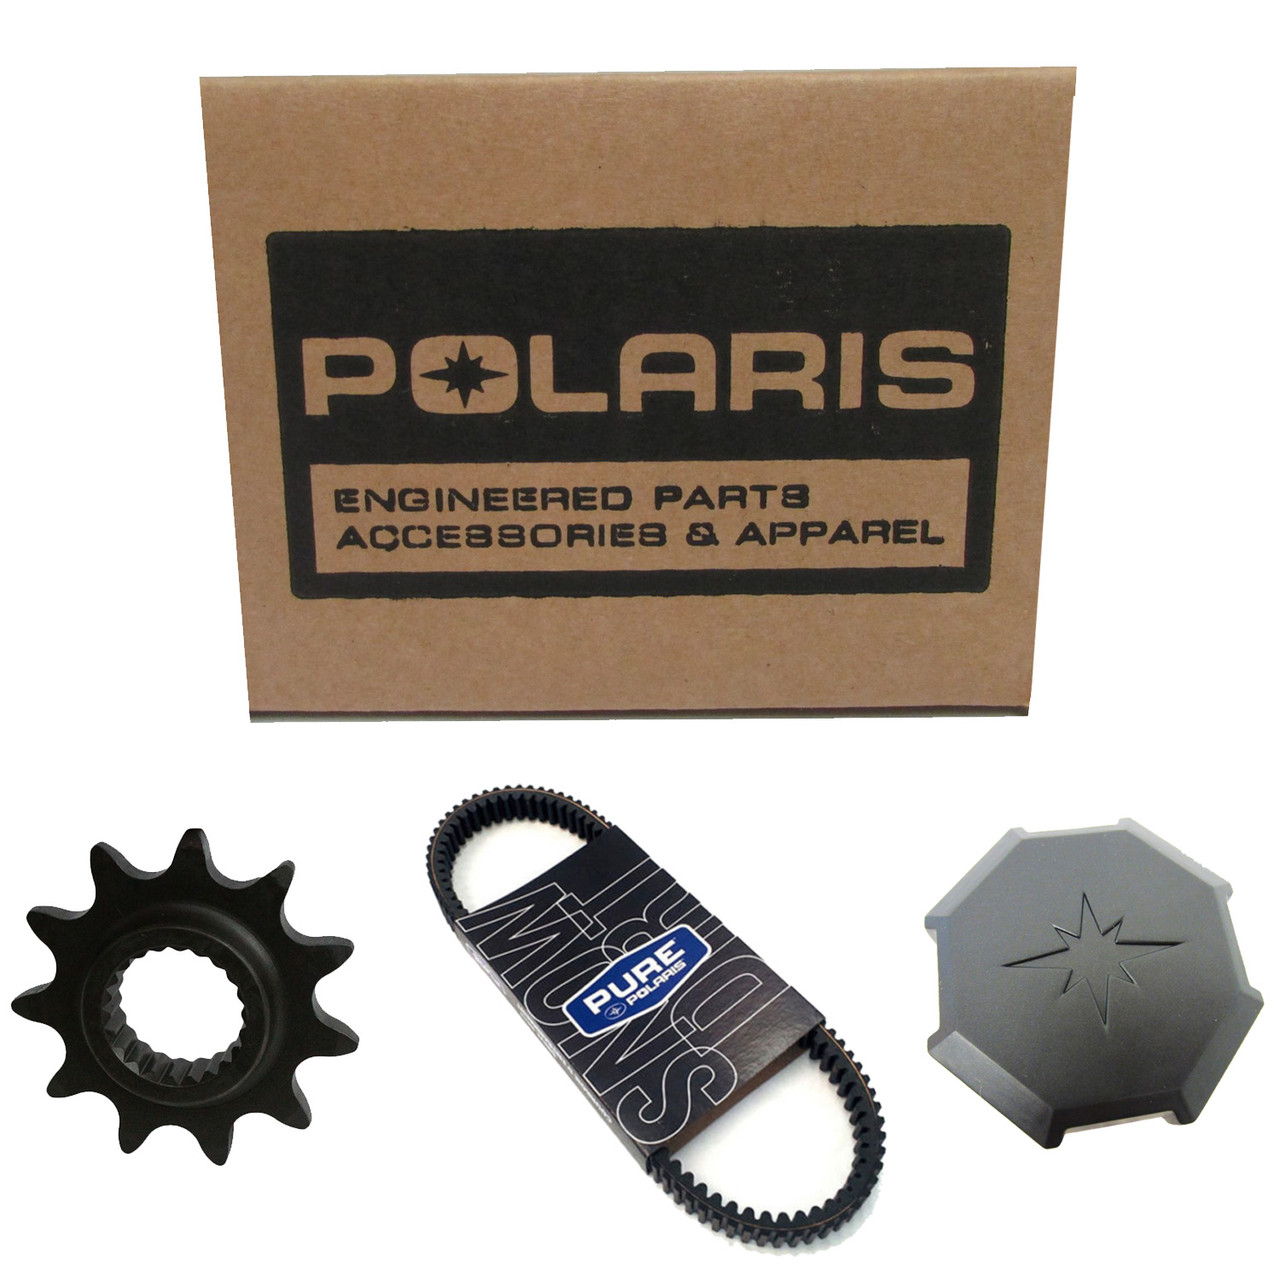 Polaris New OEM ?�Kit A-Frame LH Black, 2202276-067